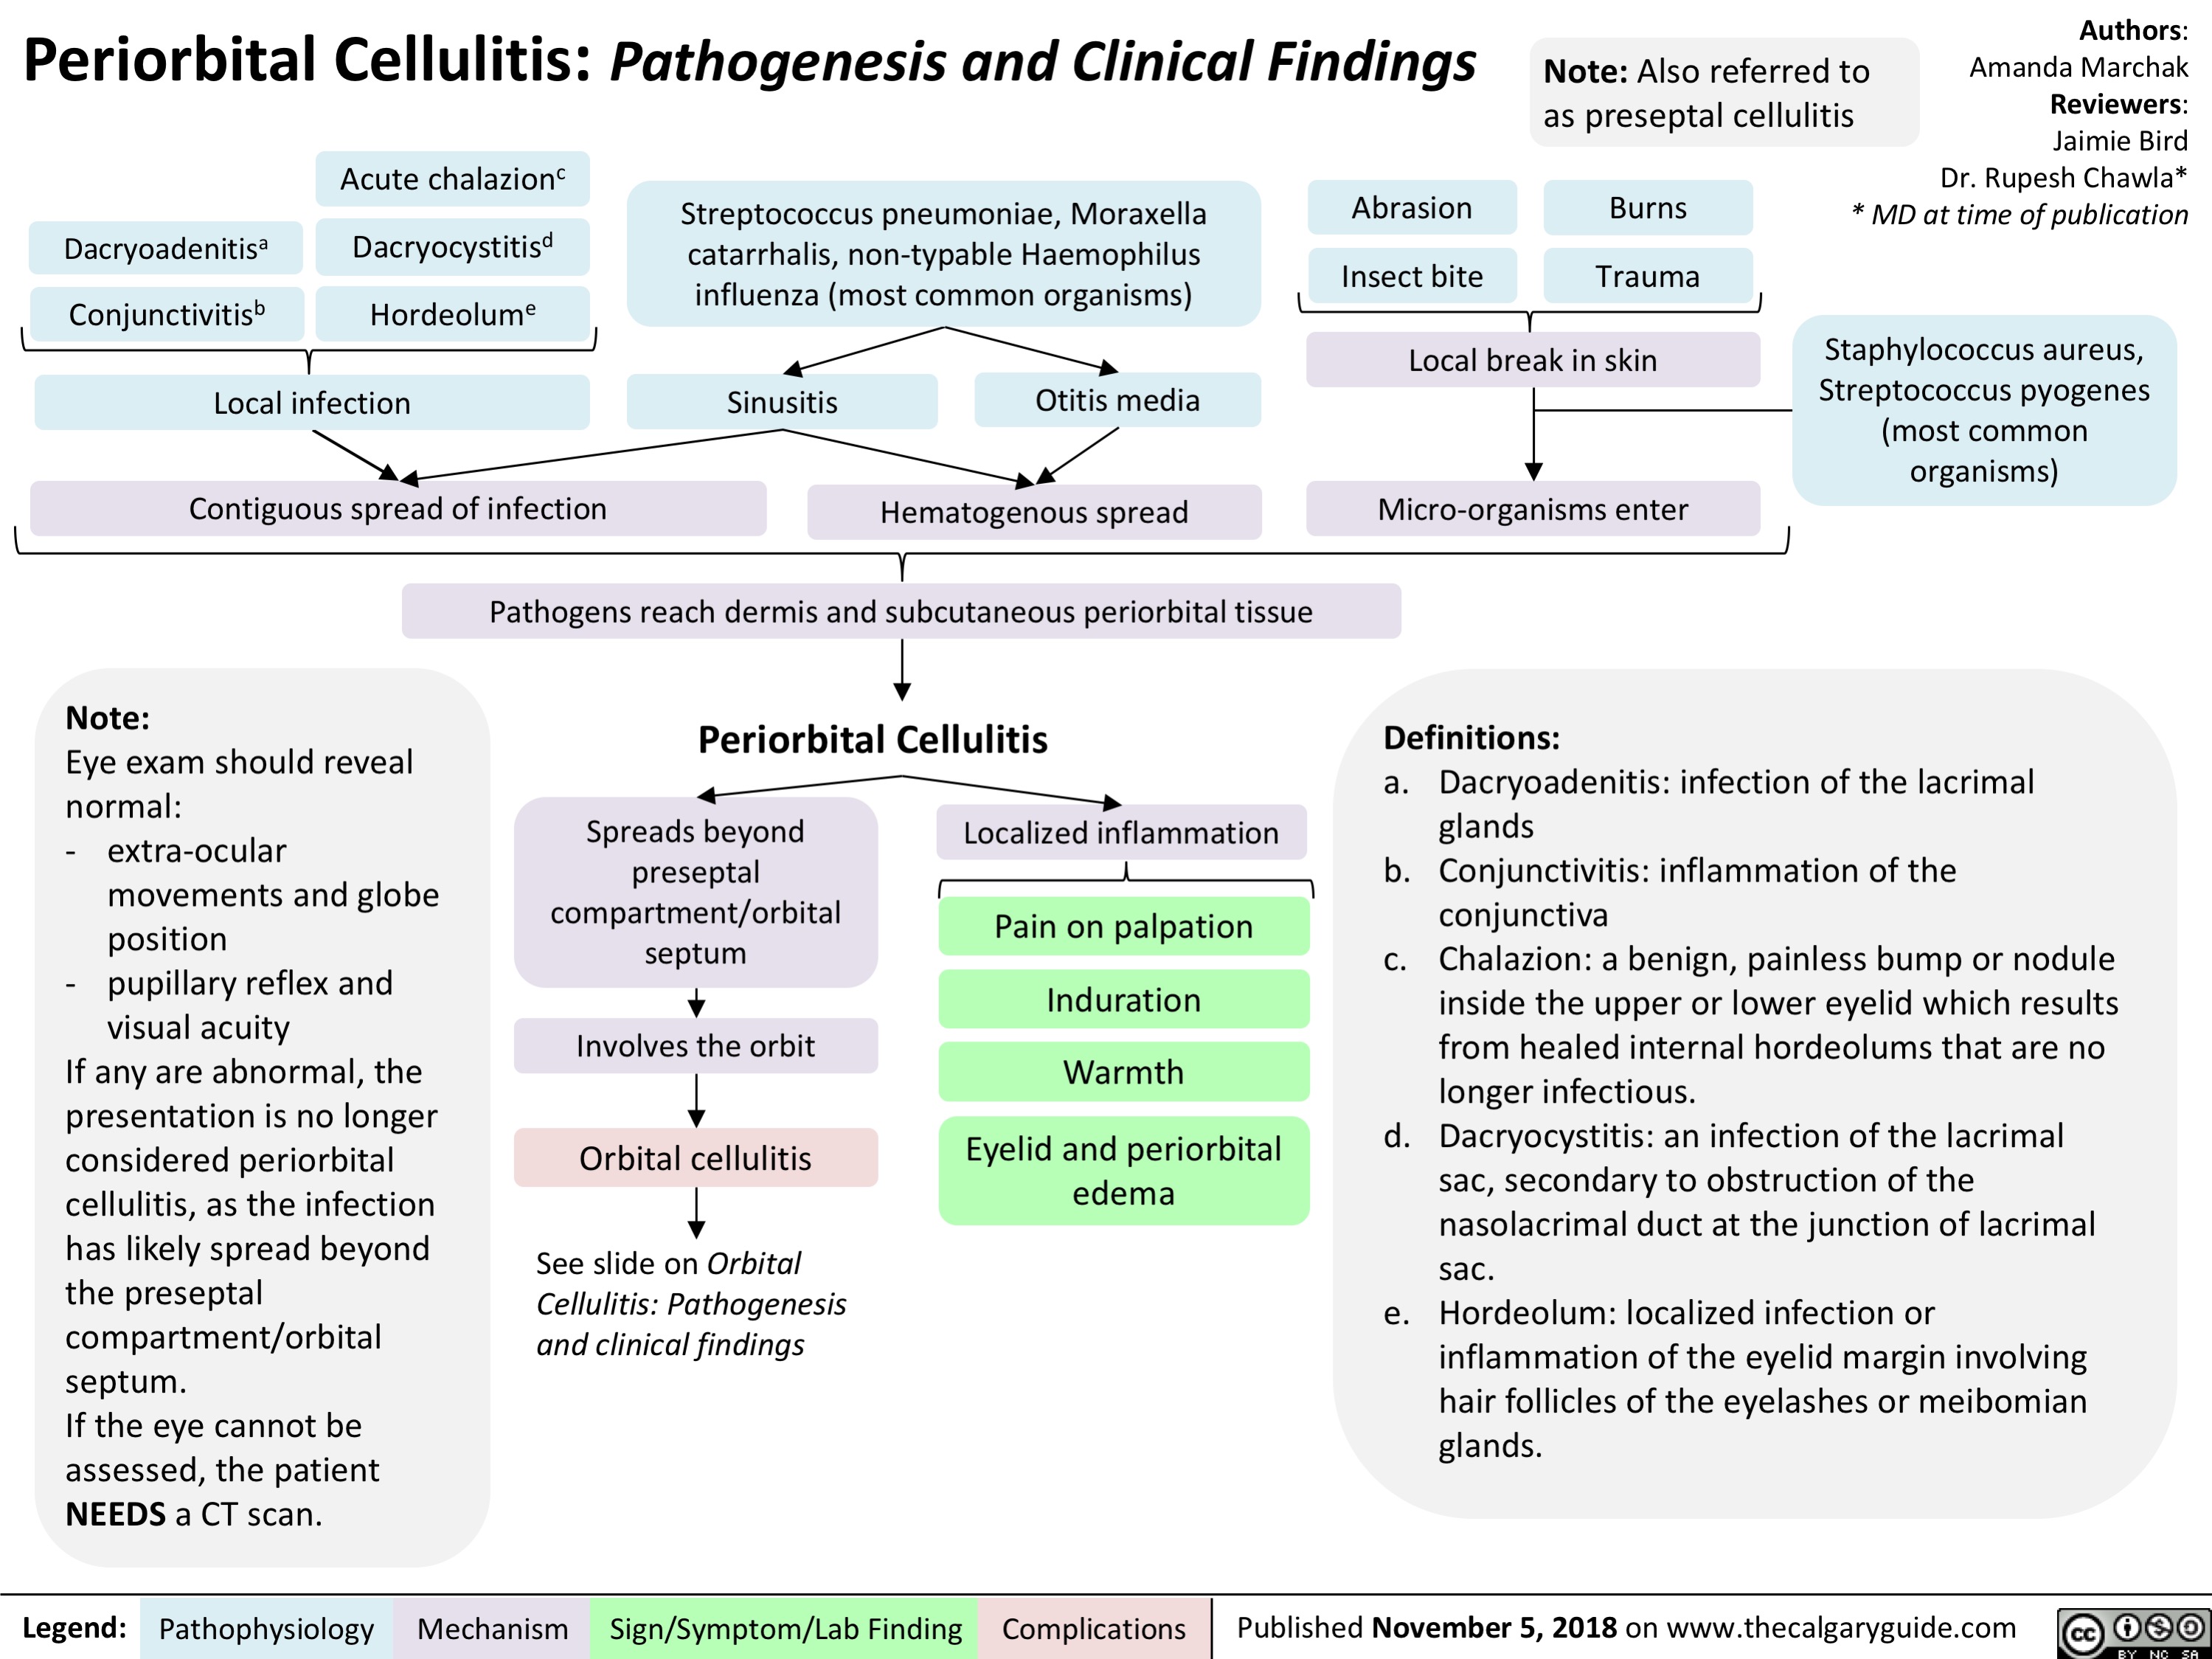 preseptal cellulitis vs orbital cellulitis